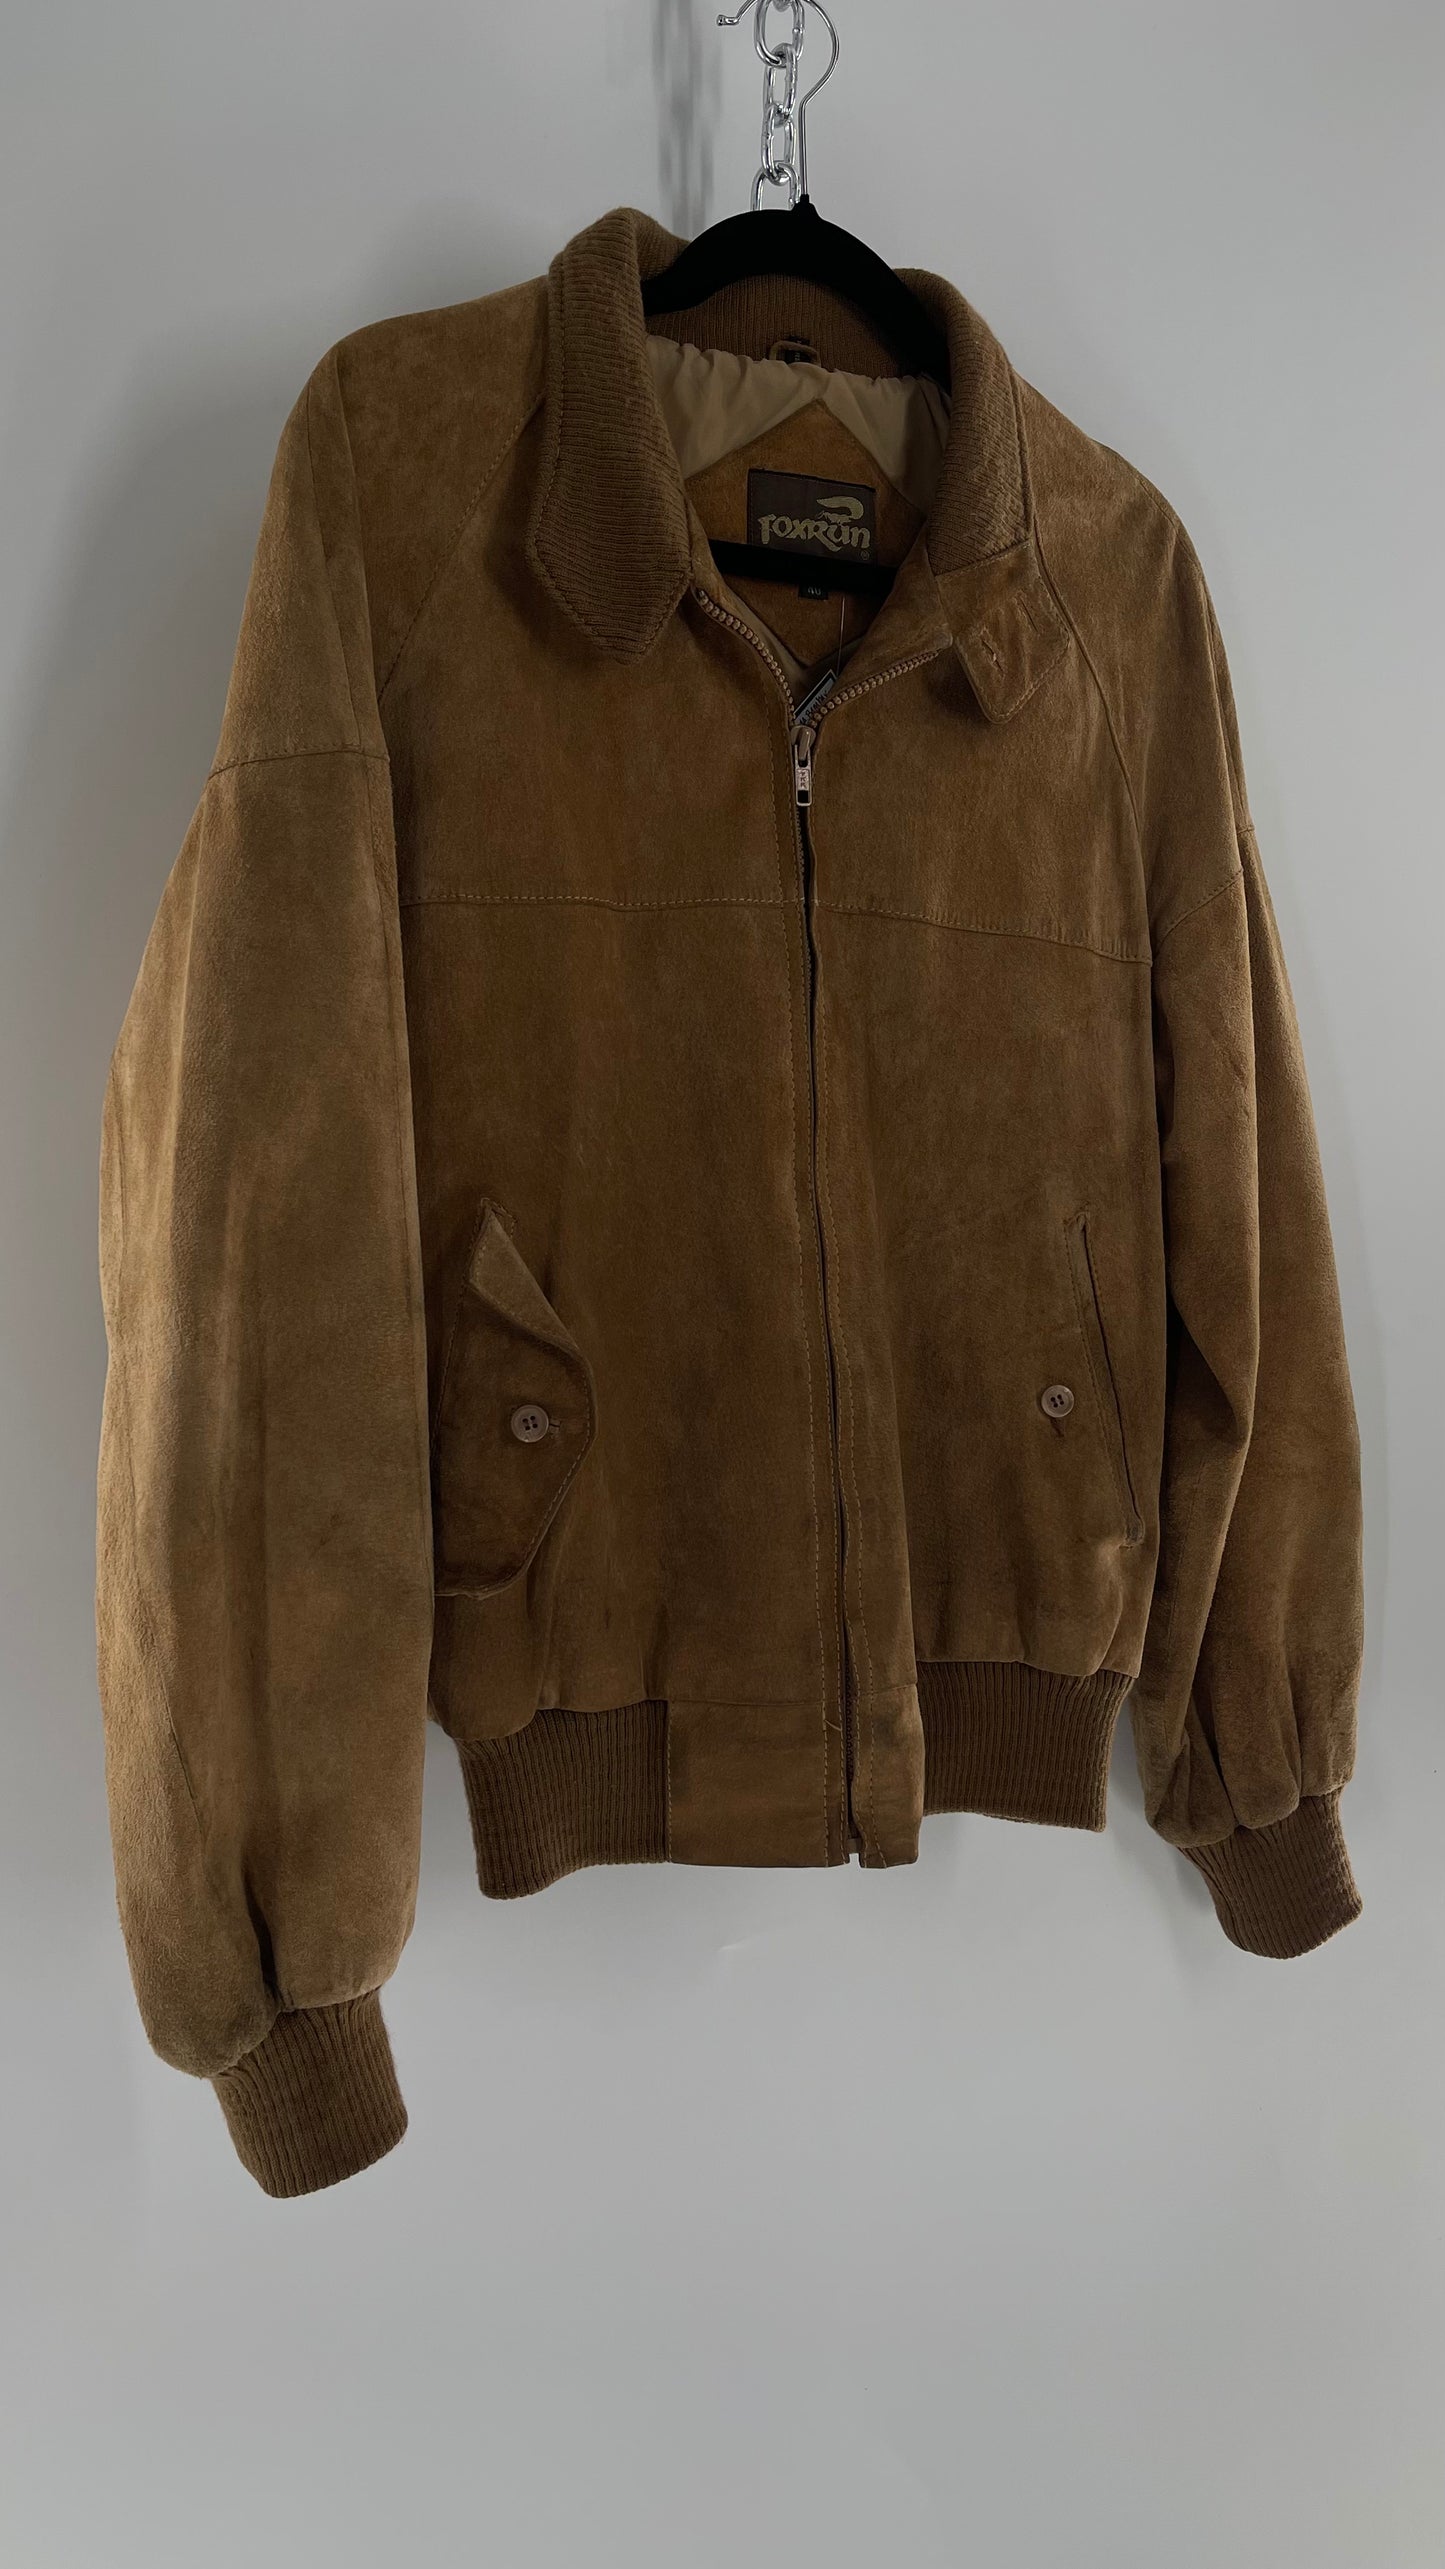 Vintage FOXRUN Caramel Brown Suede Bomber Jacket (40)